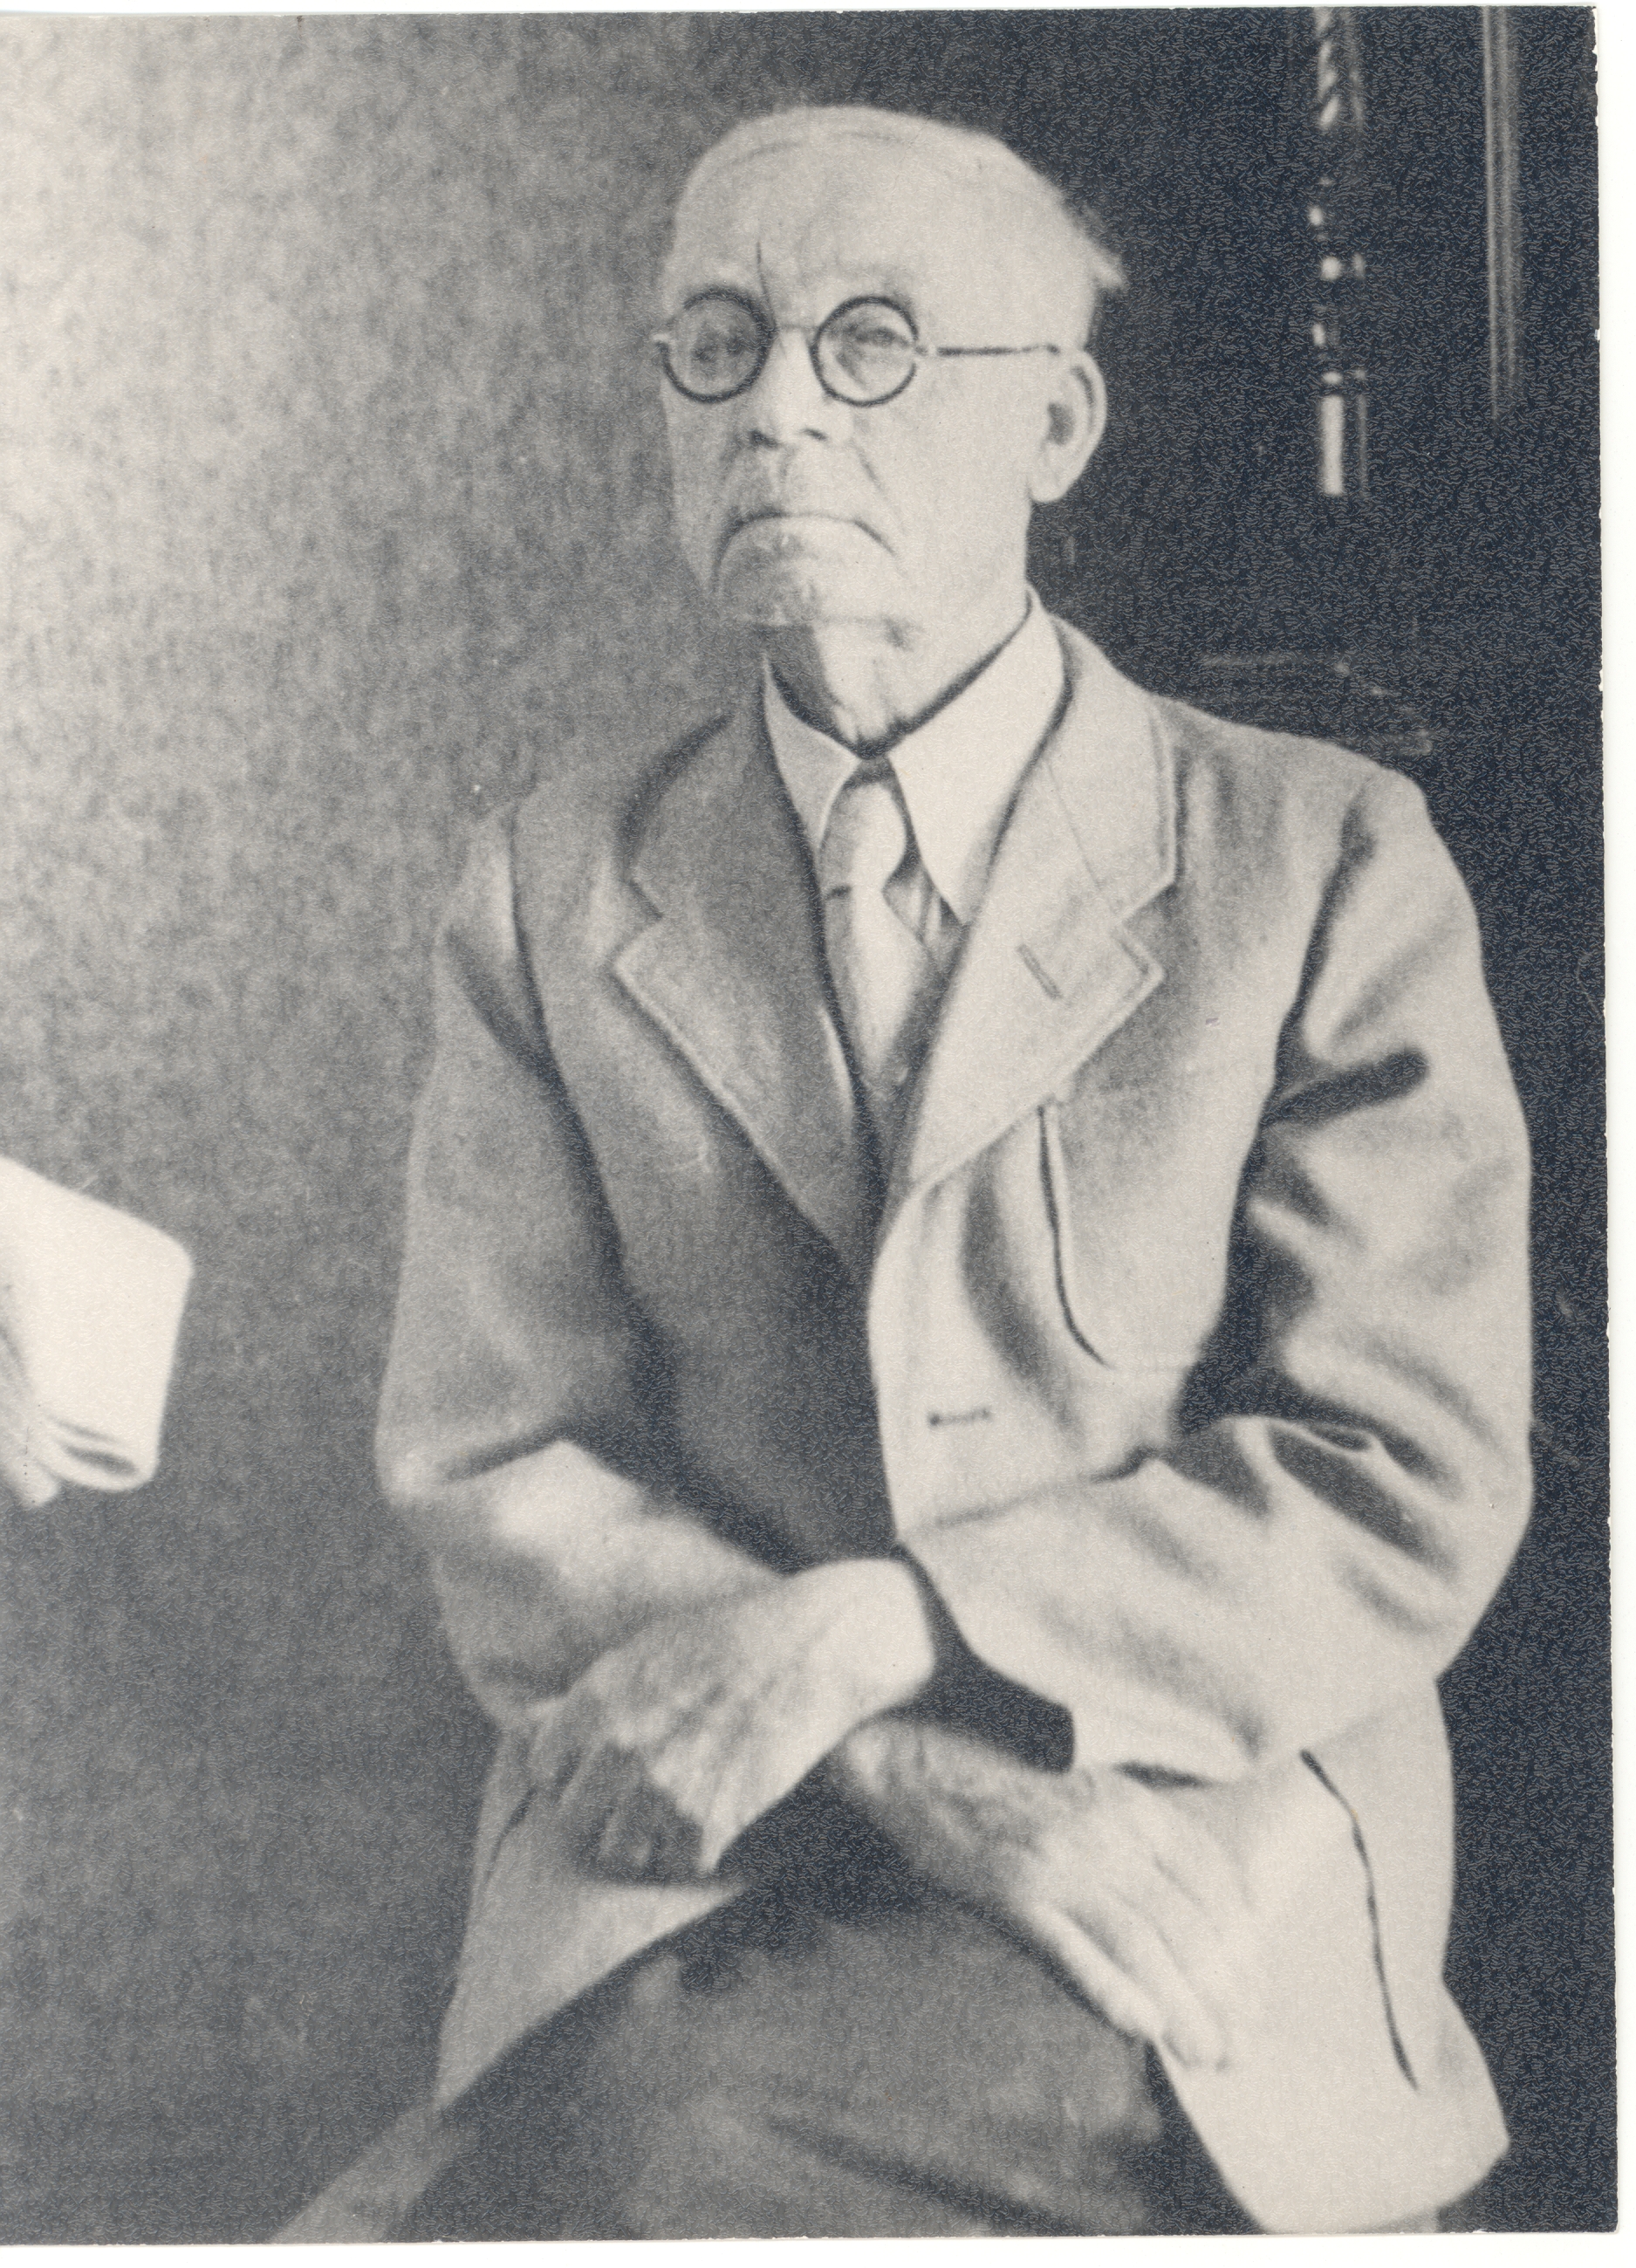 Mait Metsanurga photo from 1955